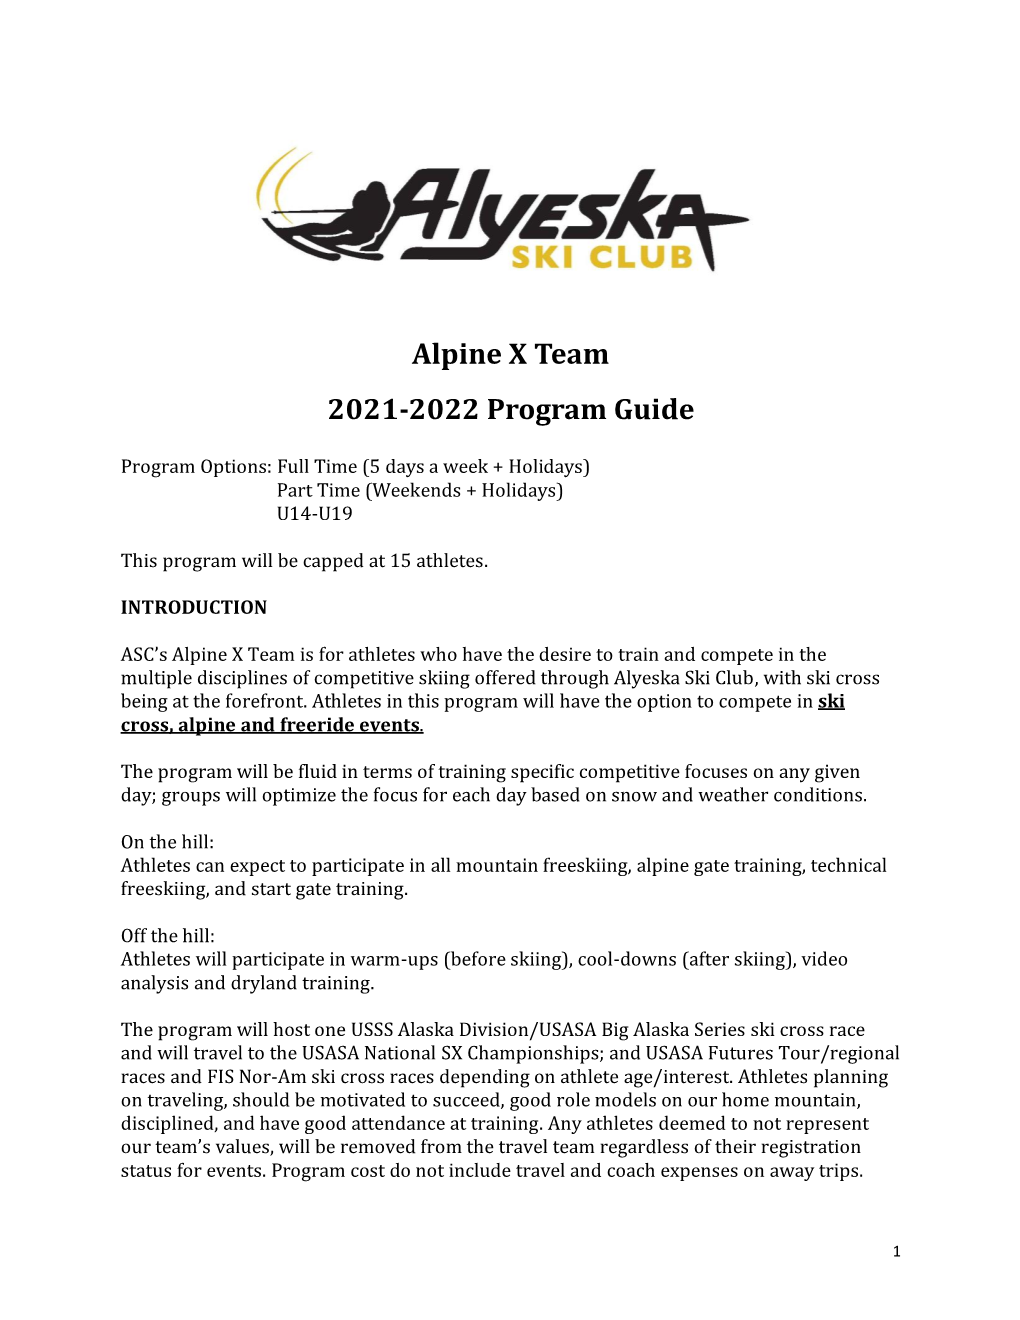 Alpine X Team 2021-2022 Program Guide